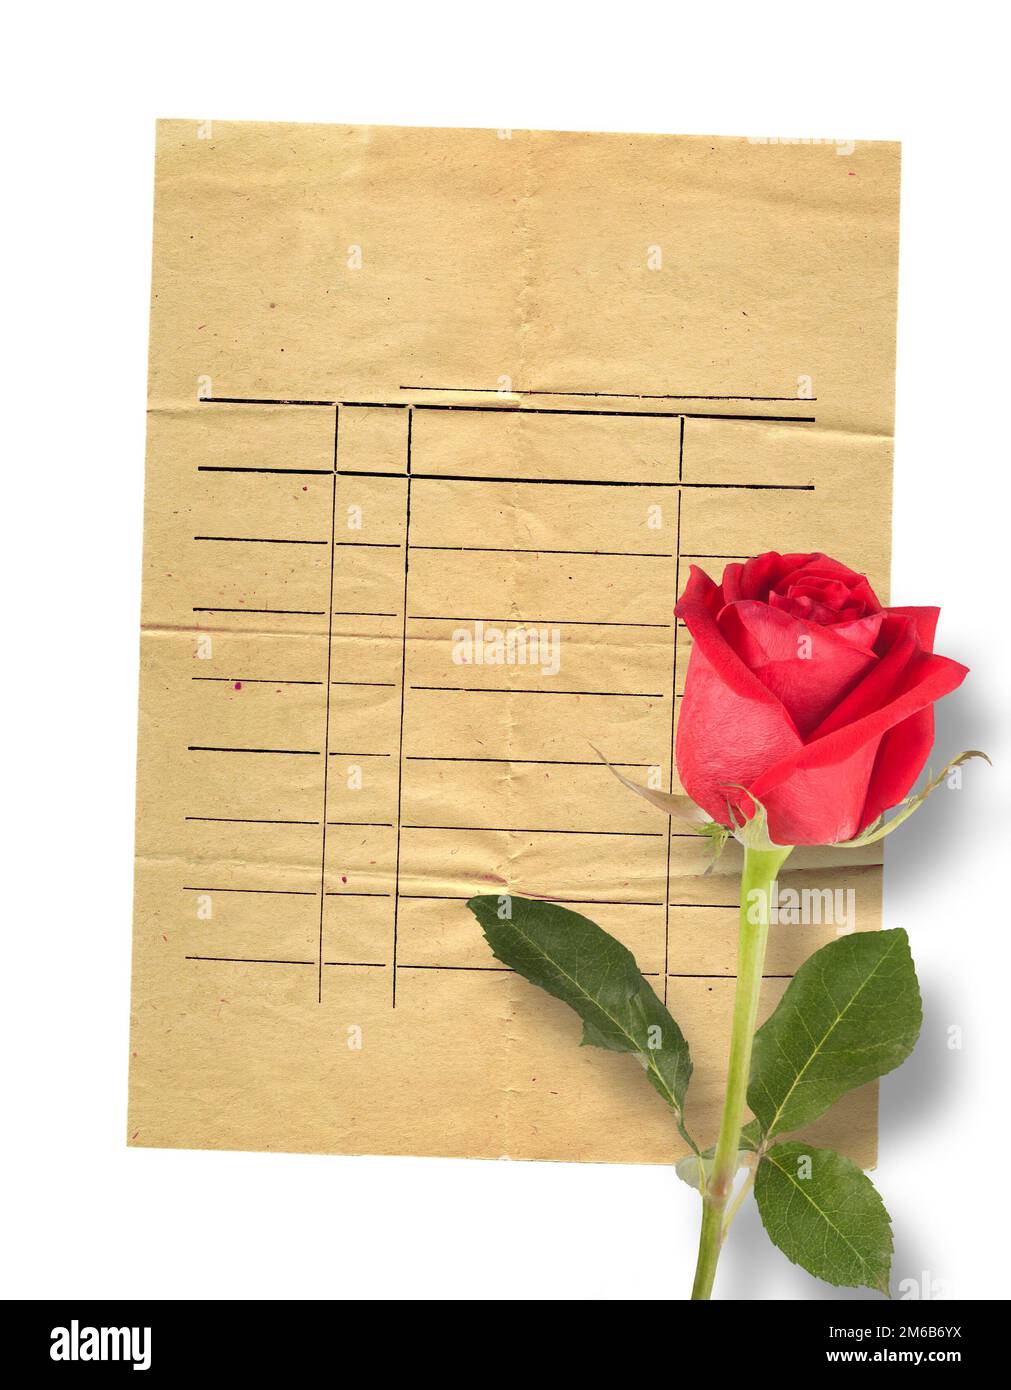 Vecchia scheda vintage con una bella rosa rossa su sfondo della carta Foto Stock